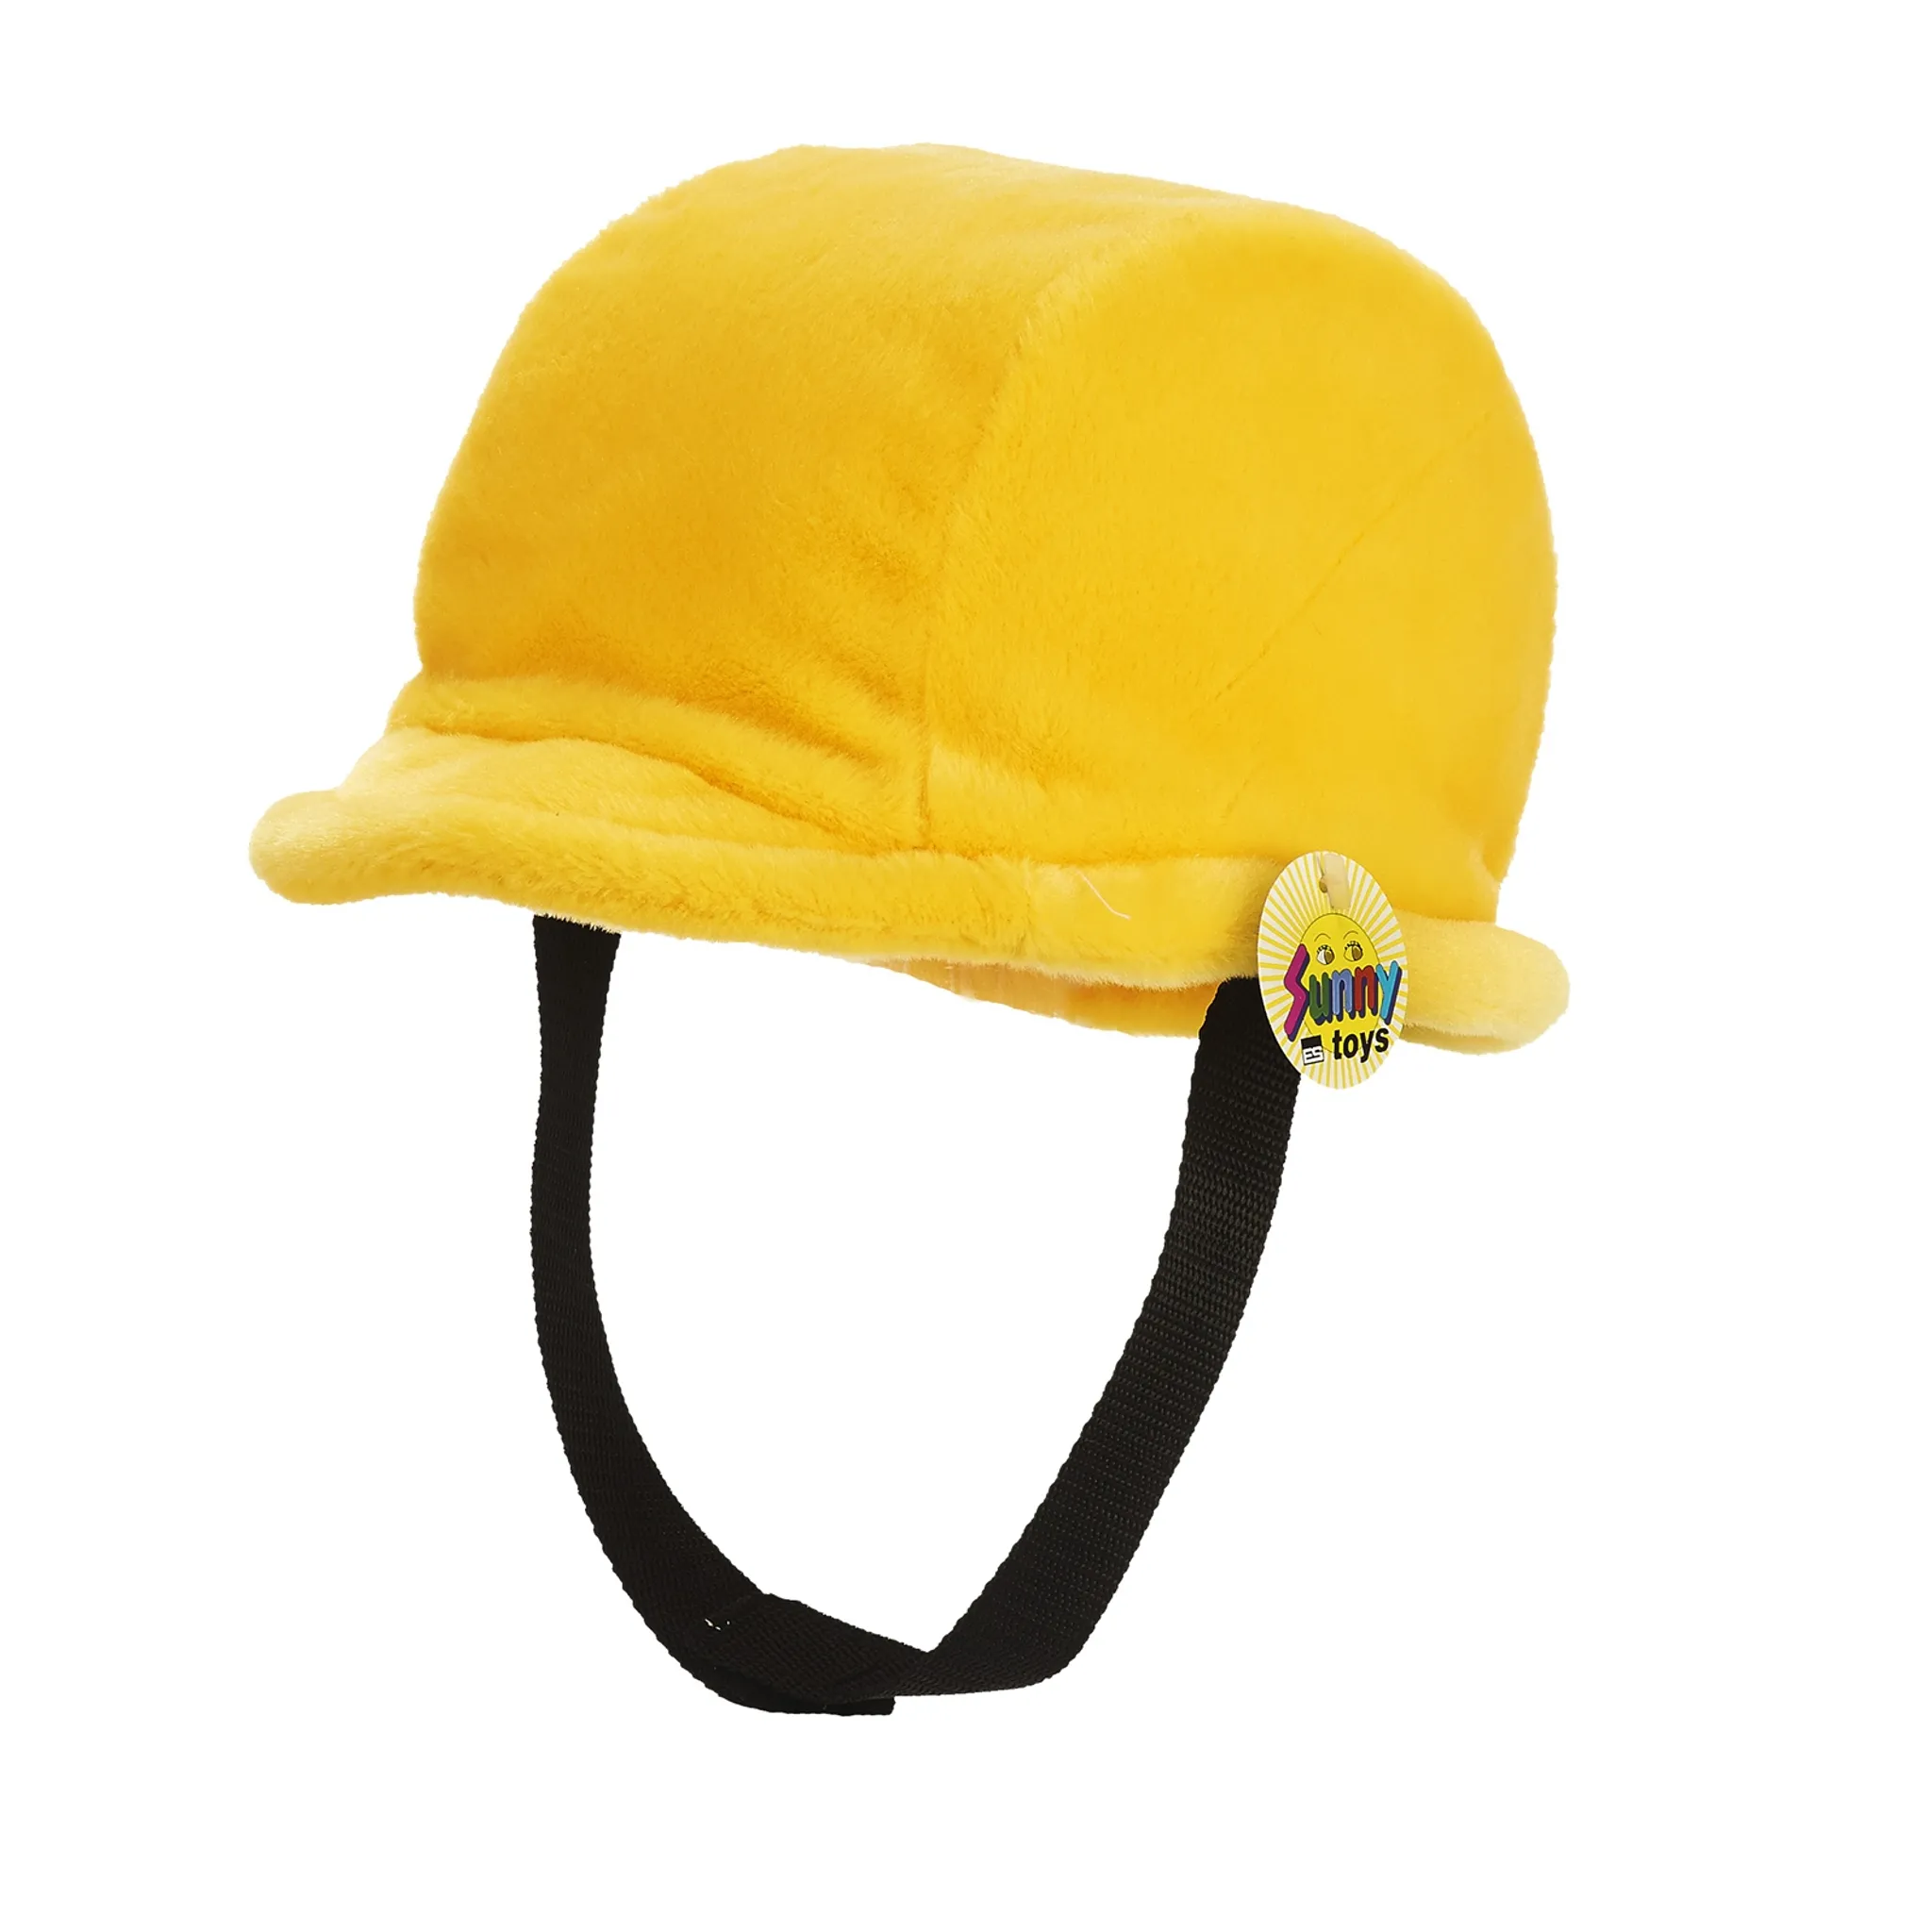 Bauarbeiter Helm - Bauhelm - Faschingshelm Hartplastik gelb